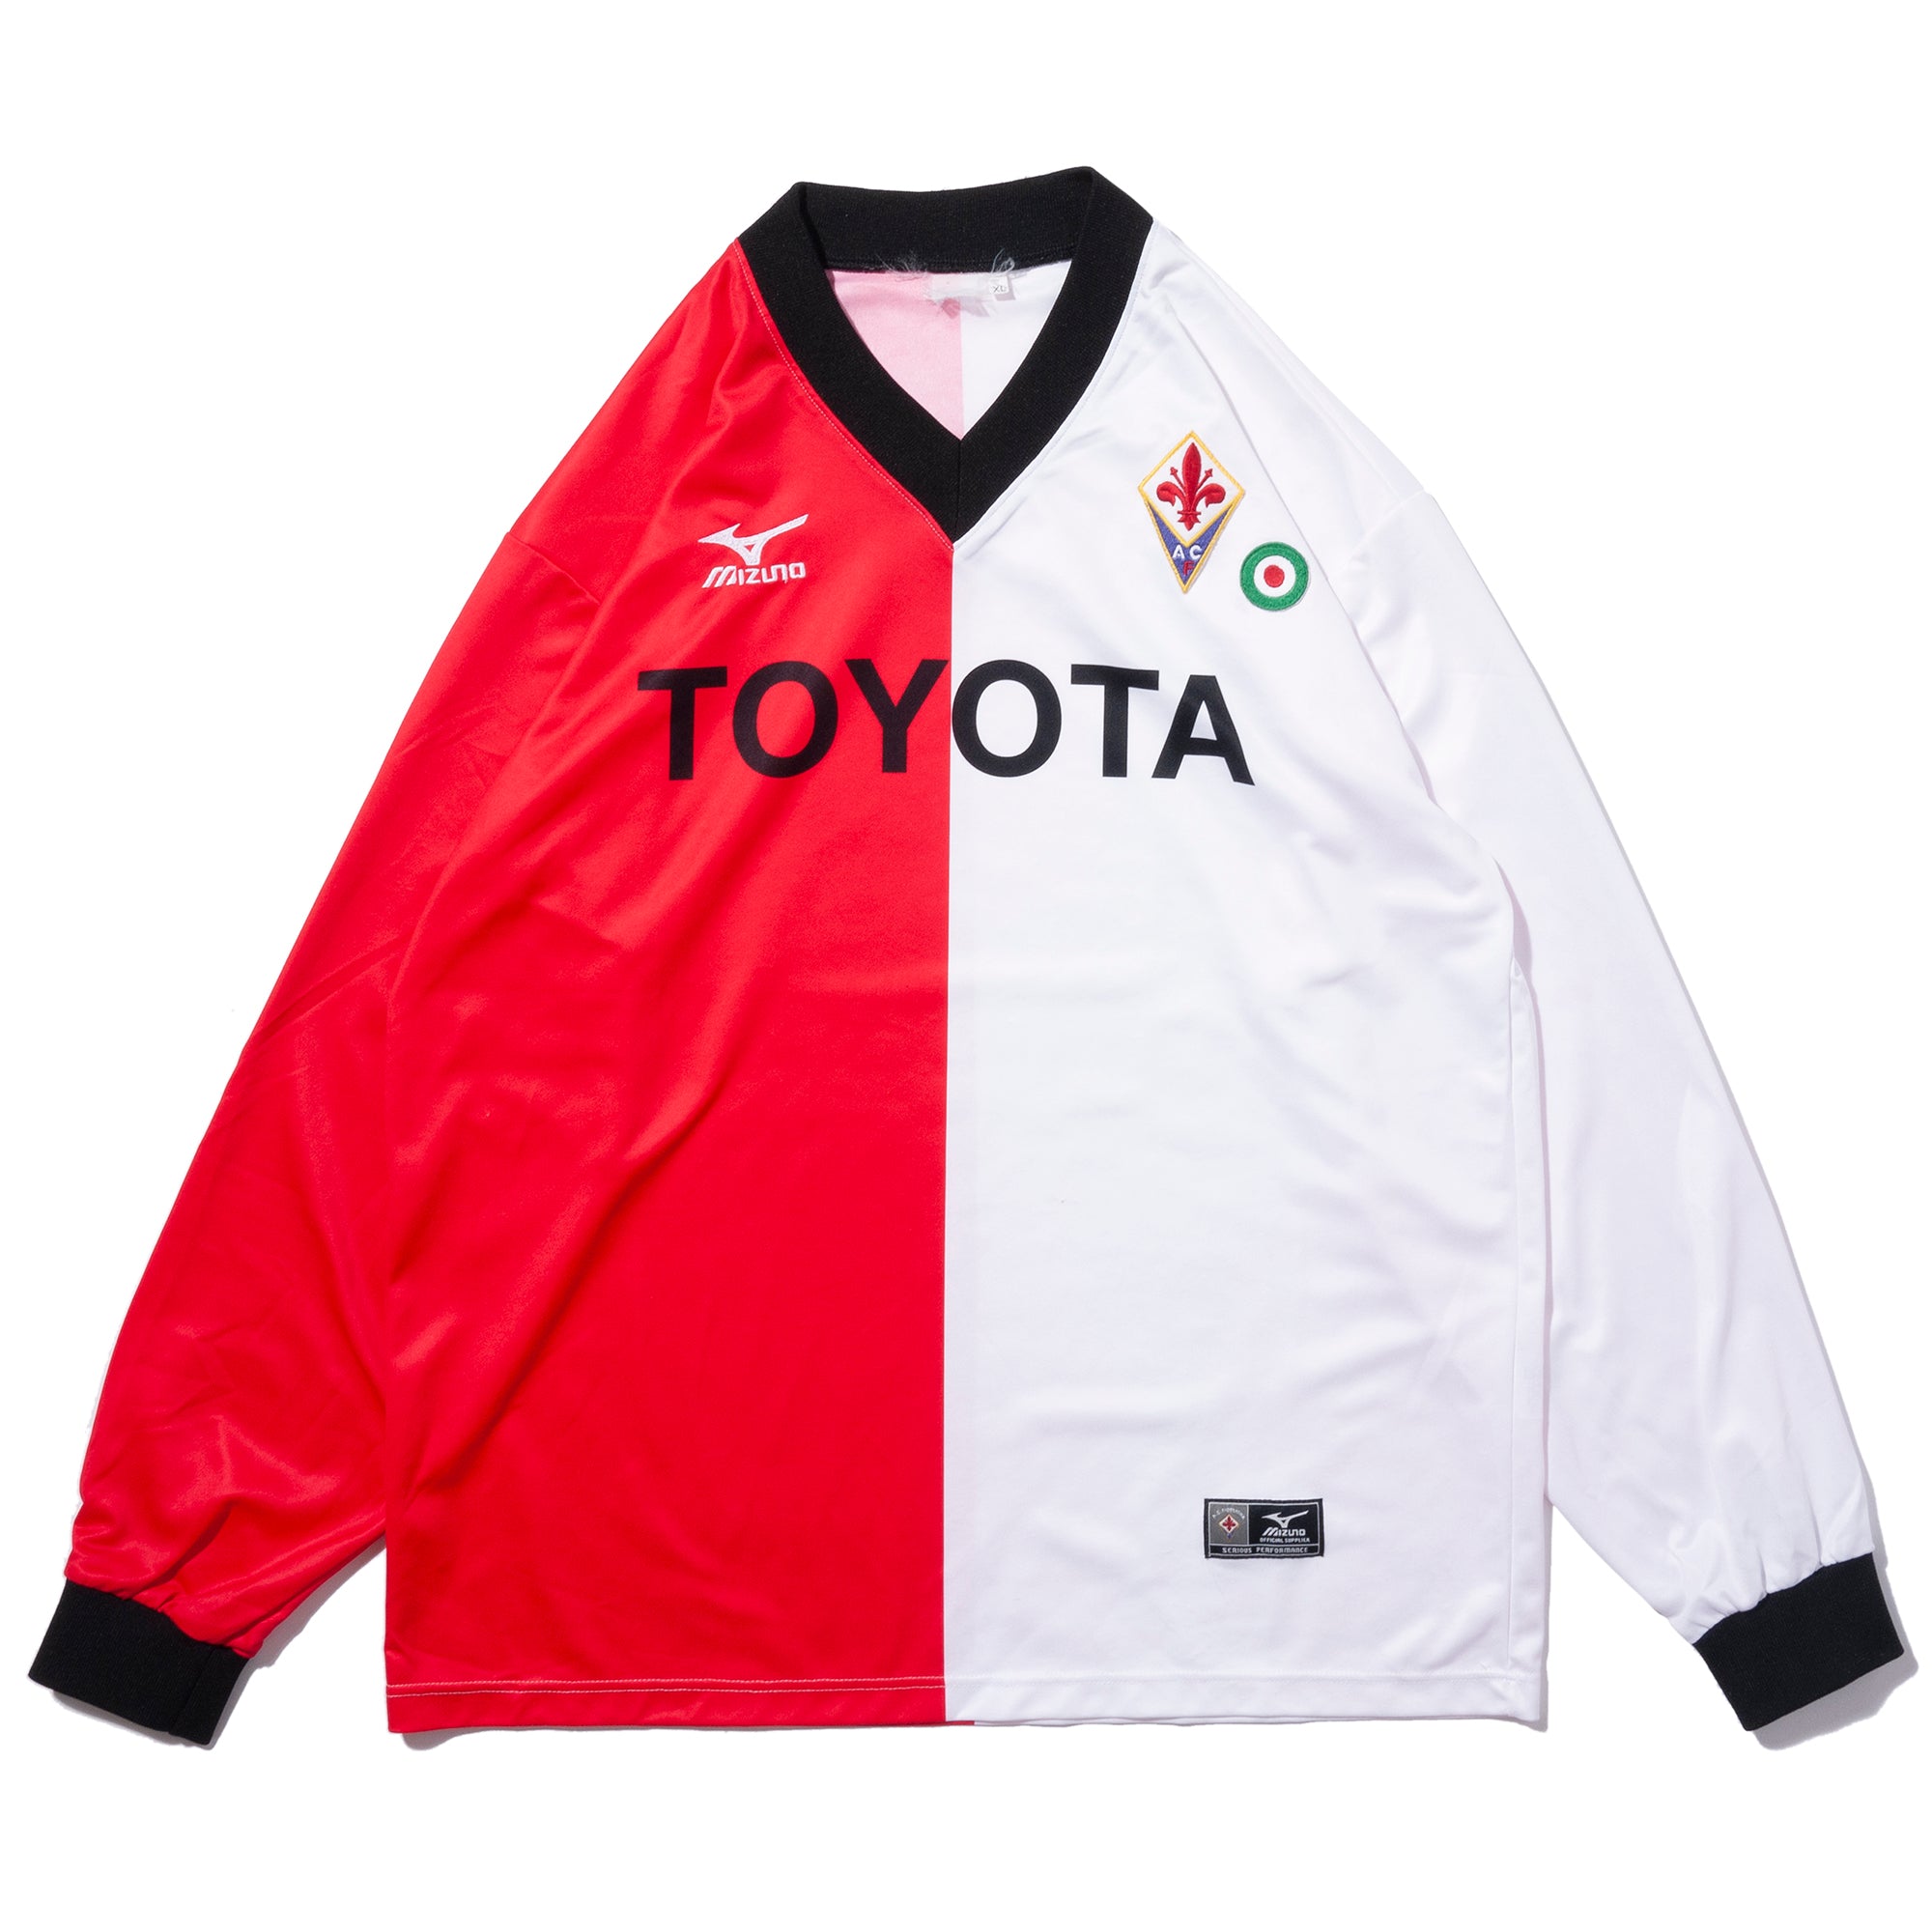 Toyota Soccer Jersey